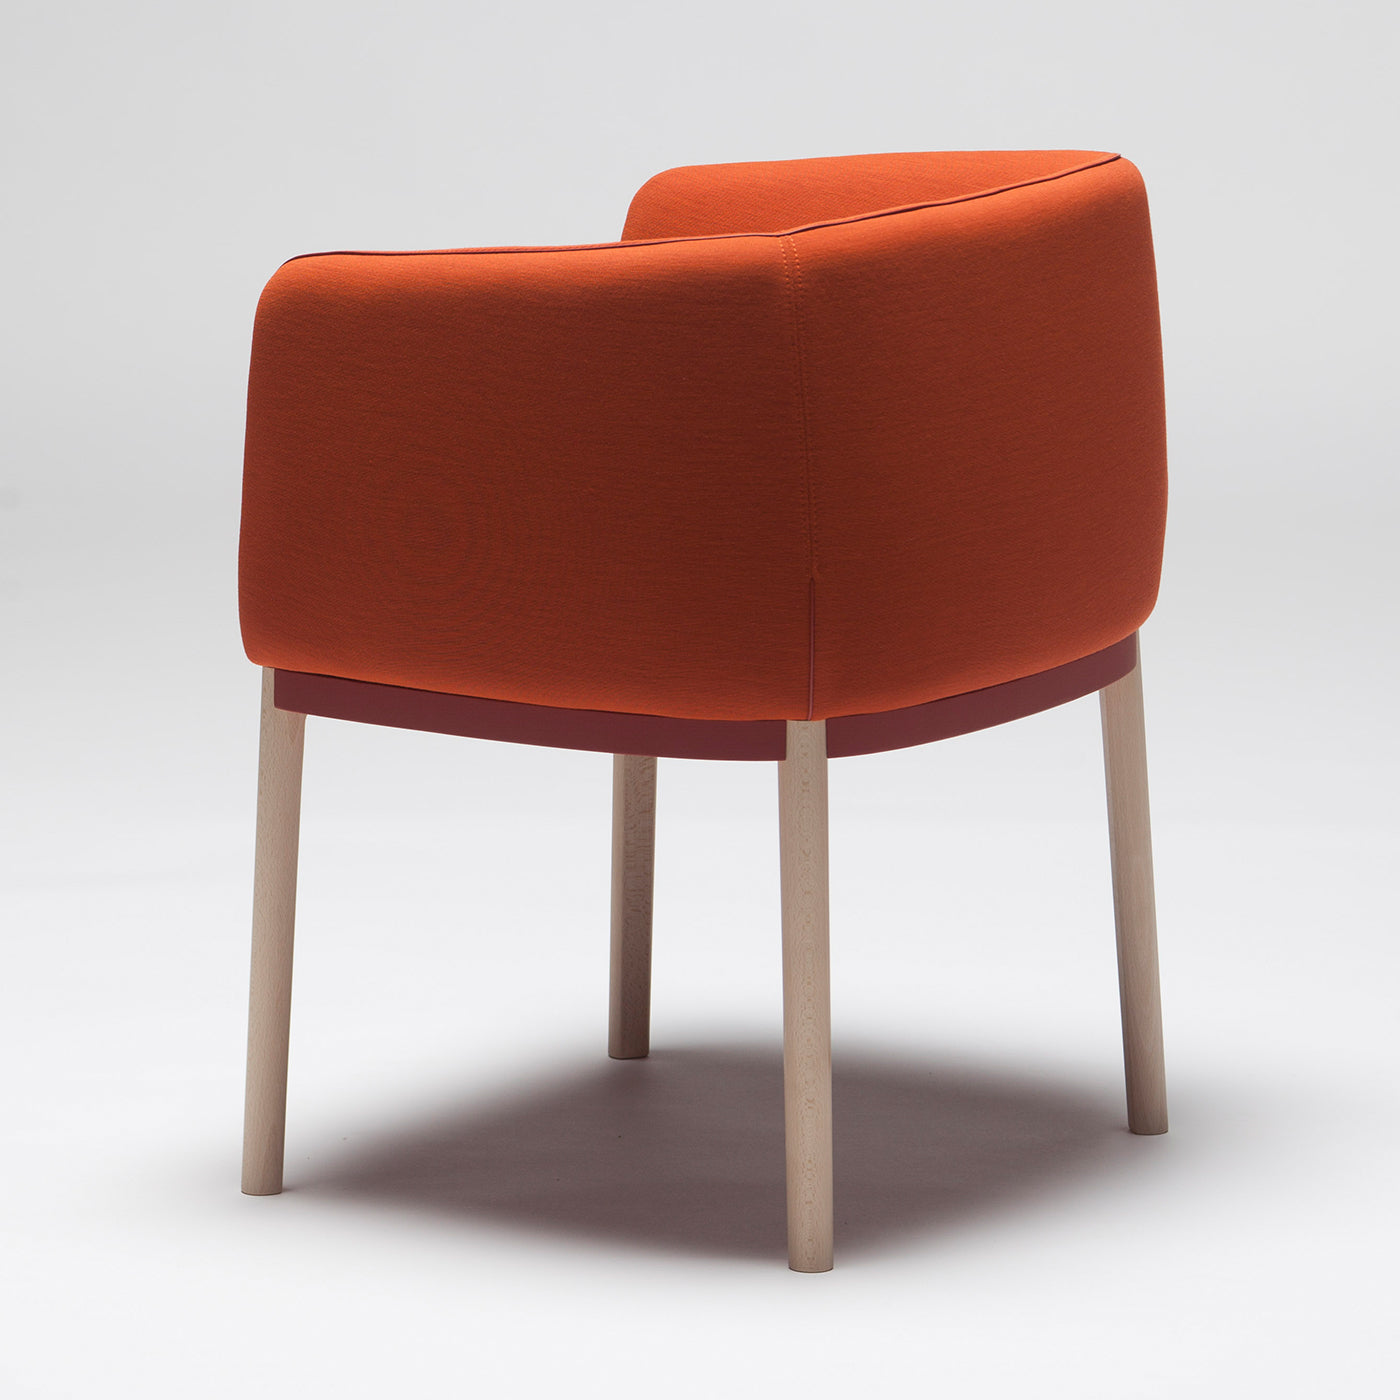 Cape 809 Orange Chair by Debiasi Sandri - Tekhne Collection - Alternative view 3